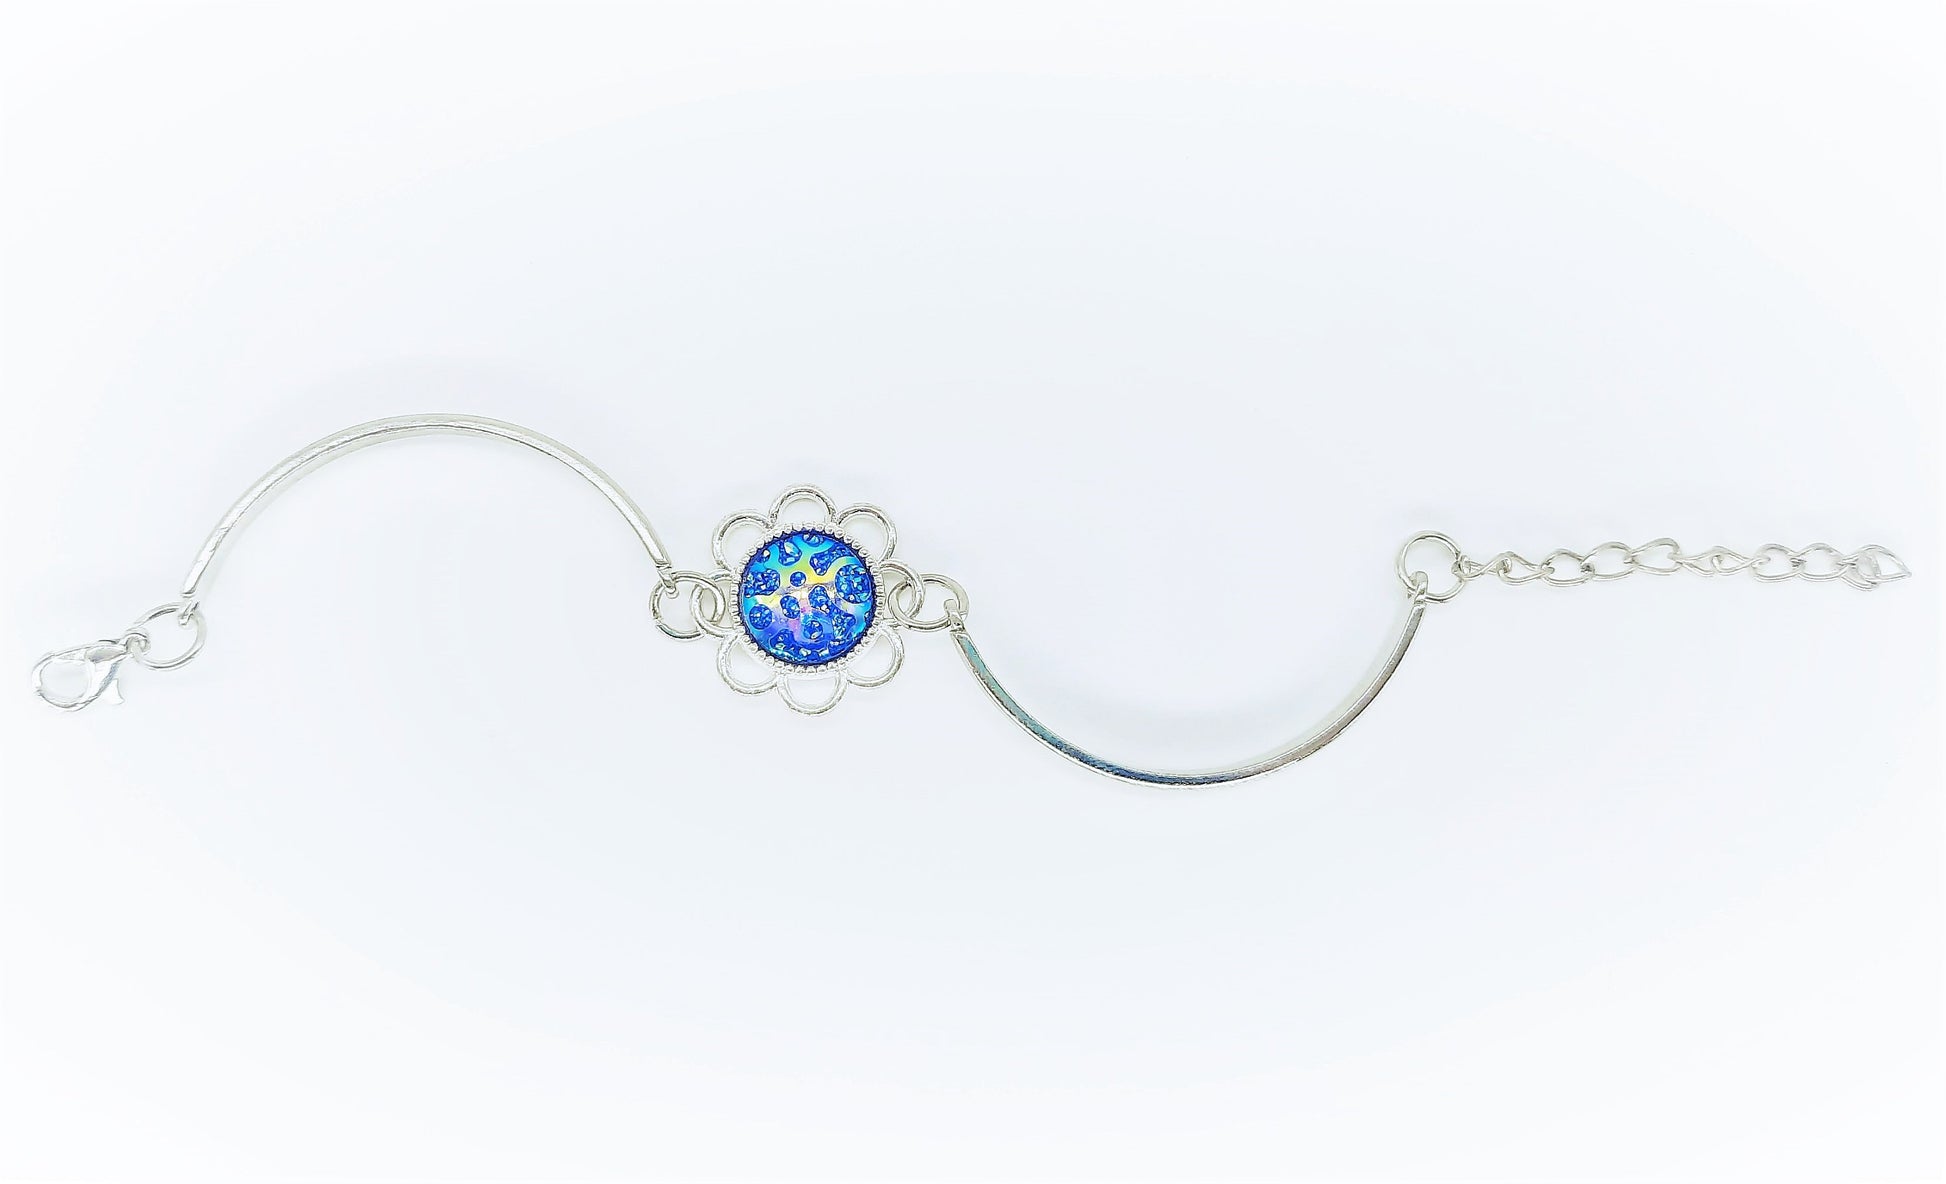 Handcrafted Flower Power Iridescent Blue Resin Stainless Steel Adjustable Bangle Bracelet - Hypoallergenic